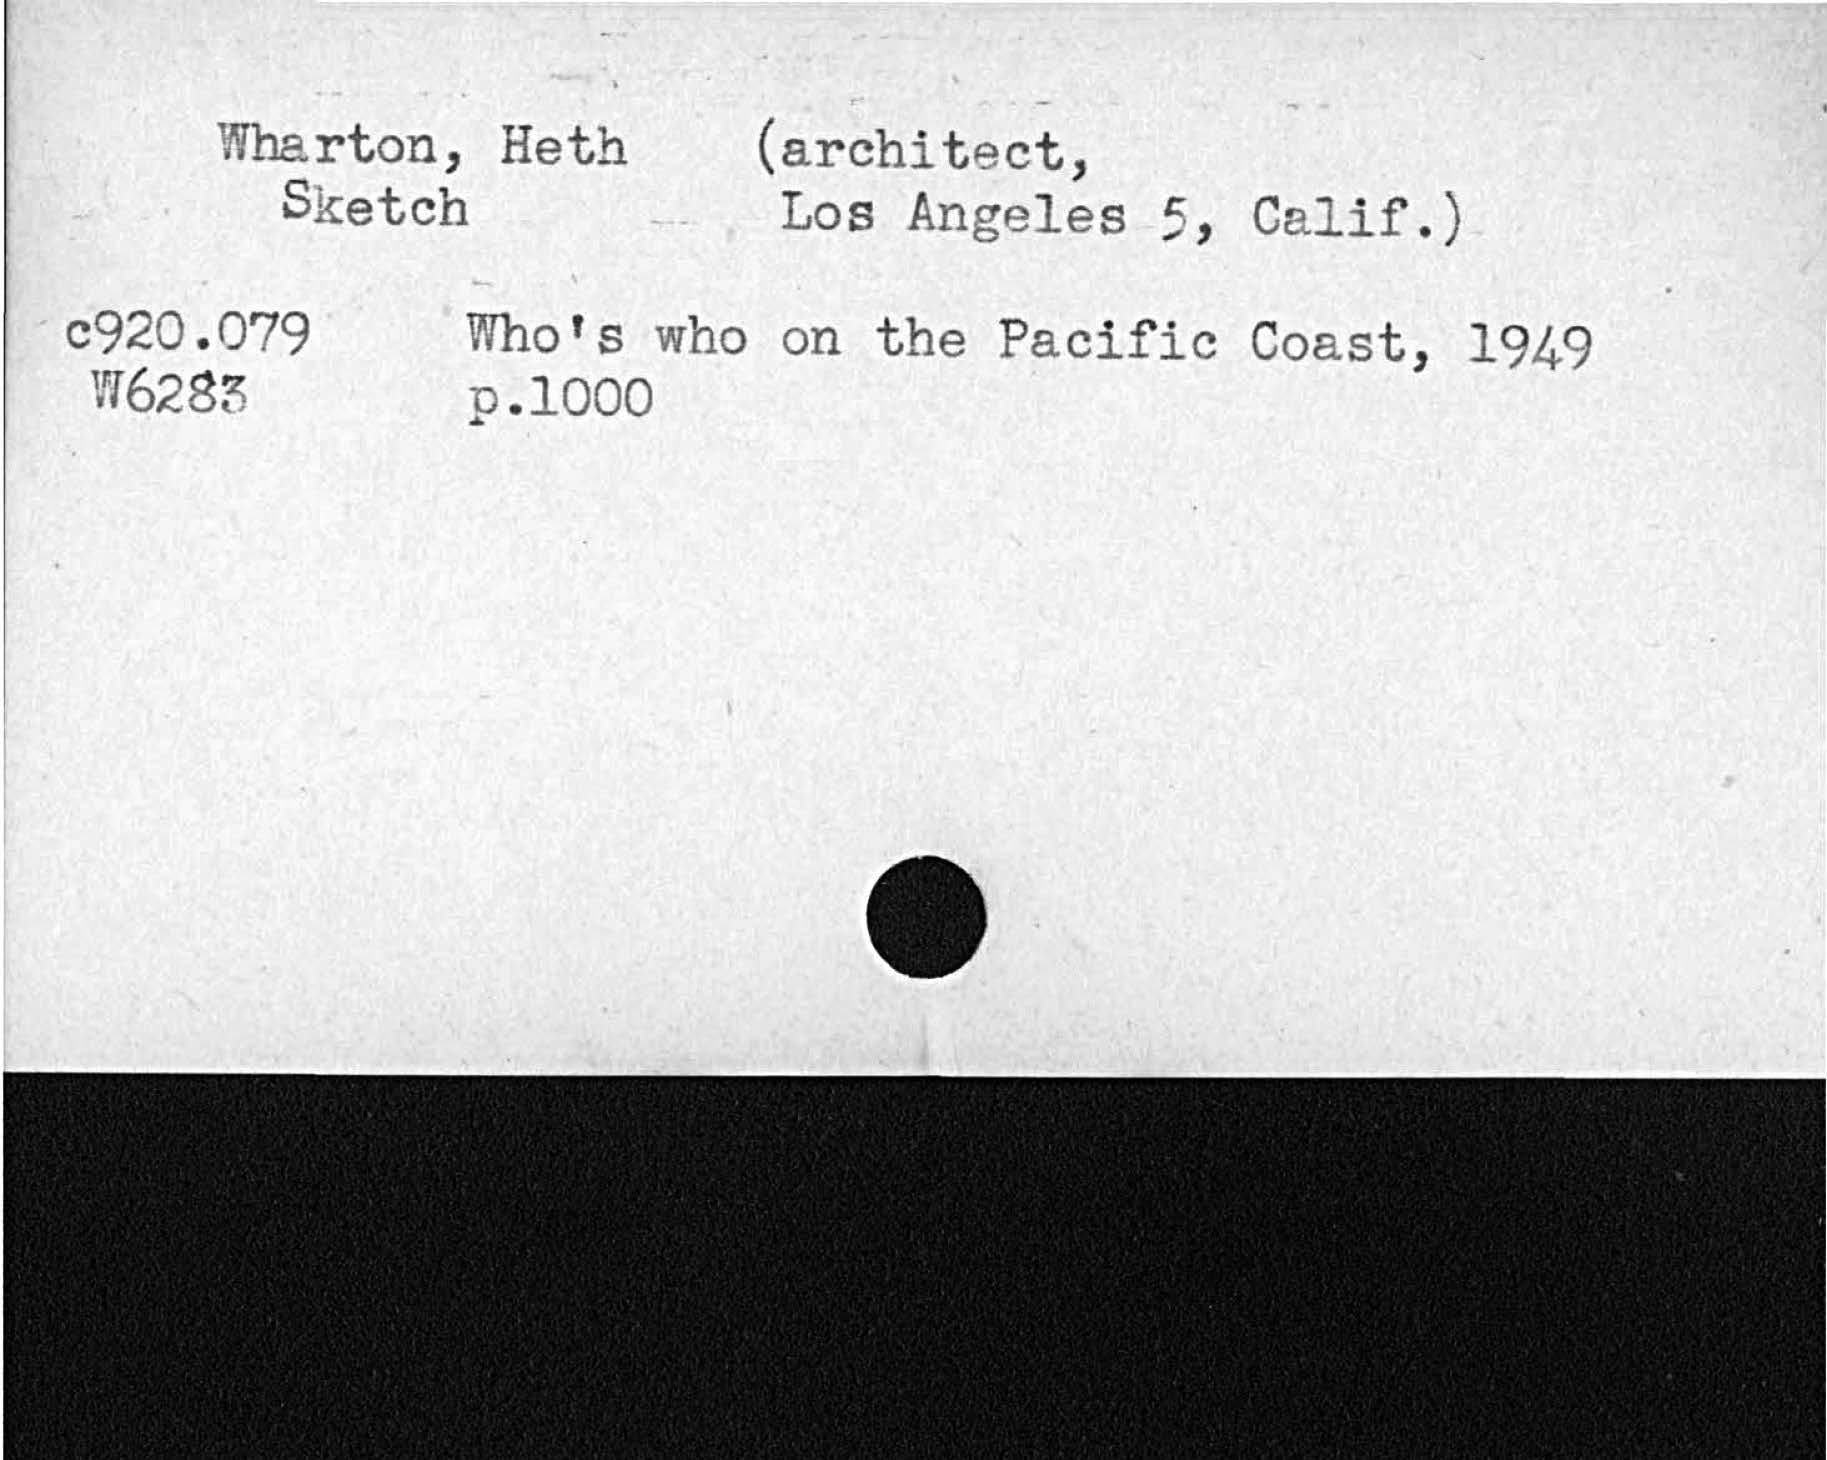 Wharton, Heth architect-Sketch Los Angeles 5, Calif.Who s who on the Pacific Coast, 1949p. 1000   c920. 079  16285